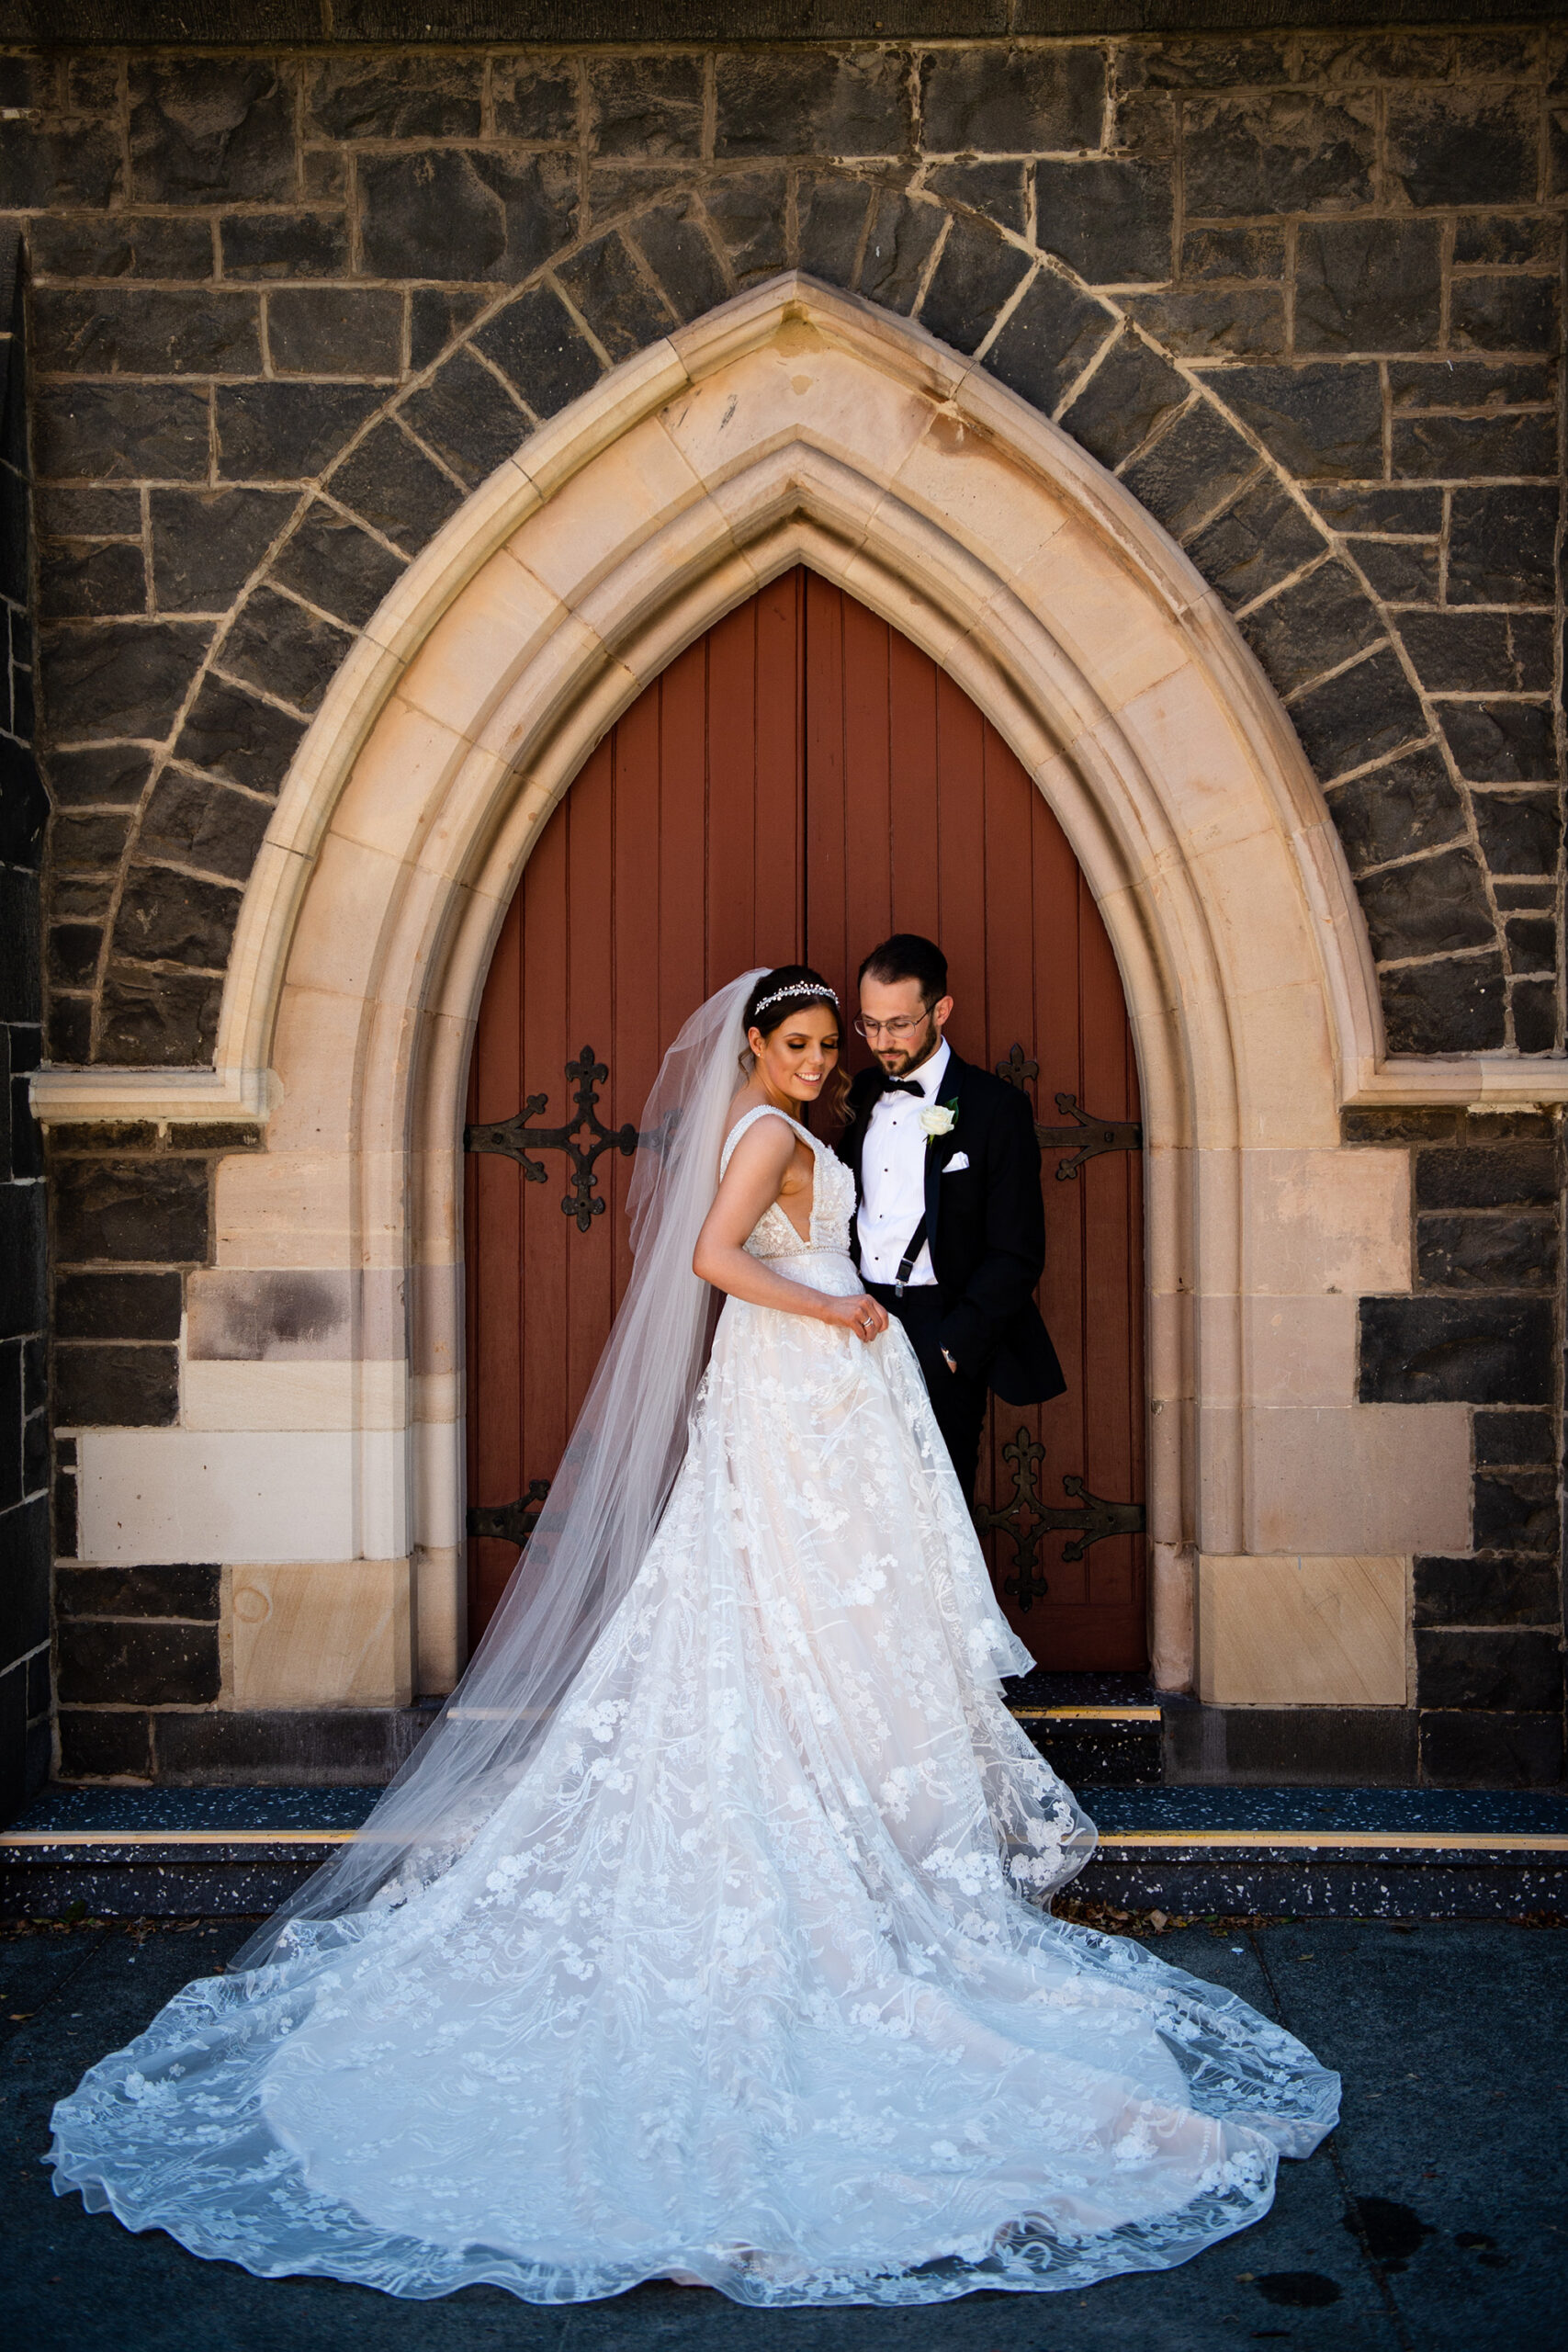 Lauren Vince Romantic Wedding Icon Photography Melbourne SBS 020 scaled